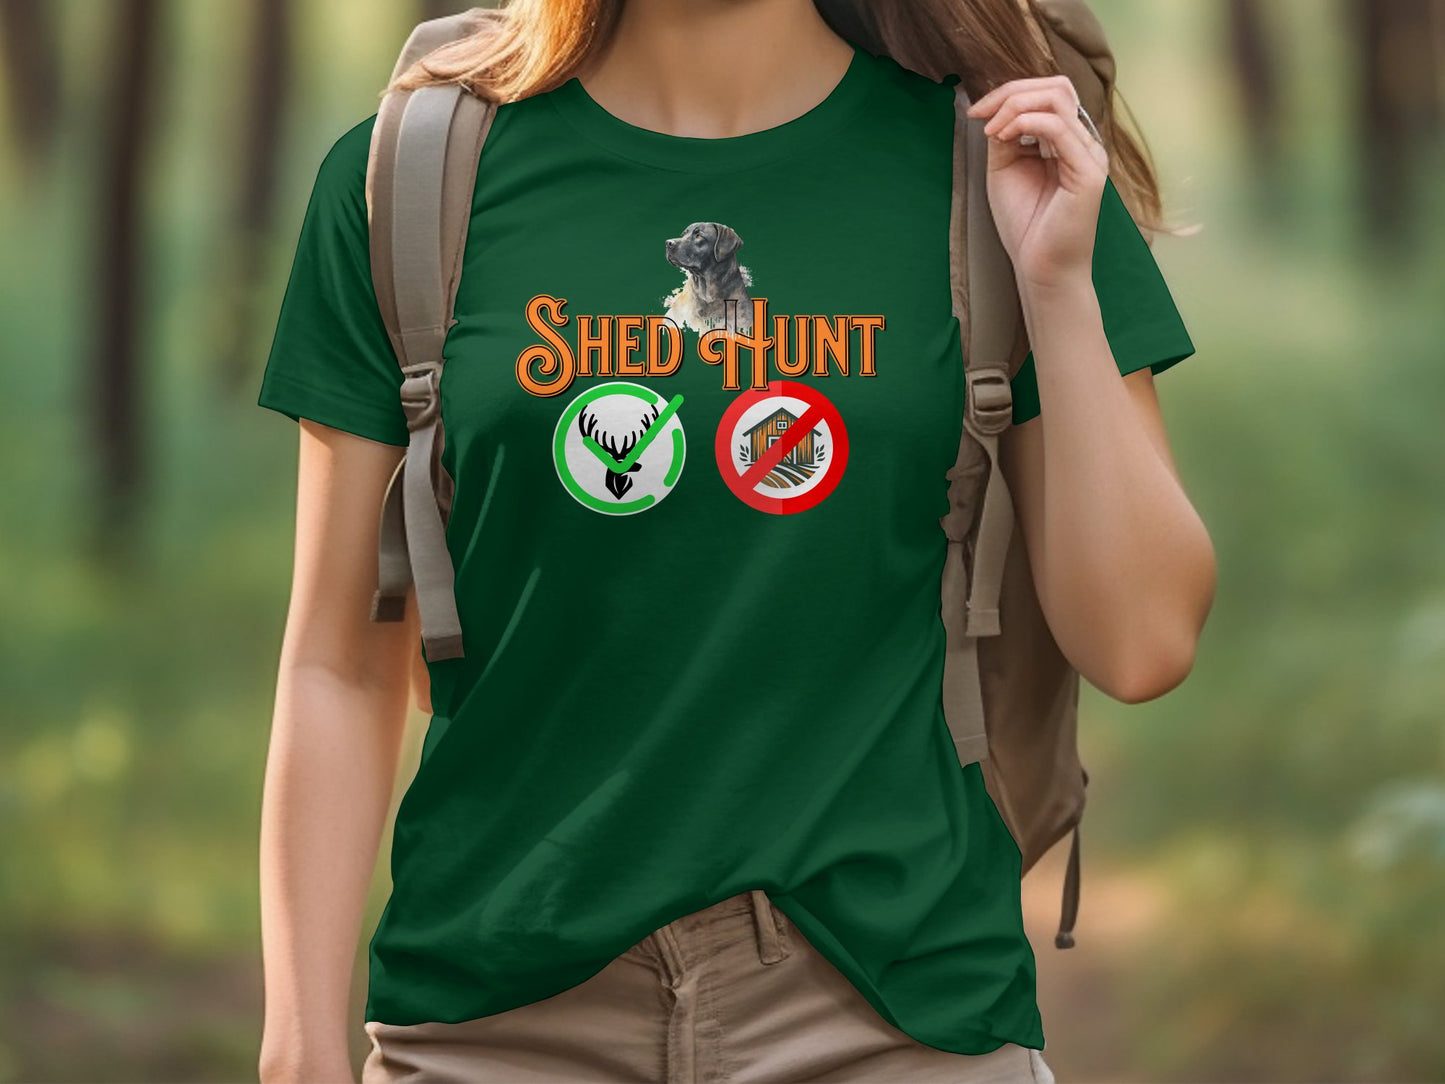 Shed Hunt Unisex T-Shirt: Antlers Not Sheds